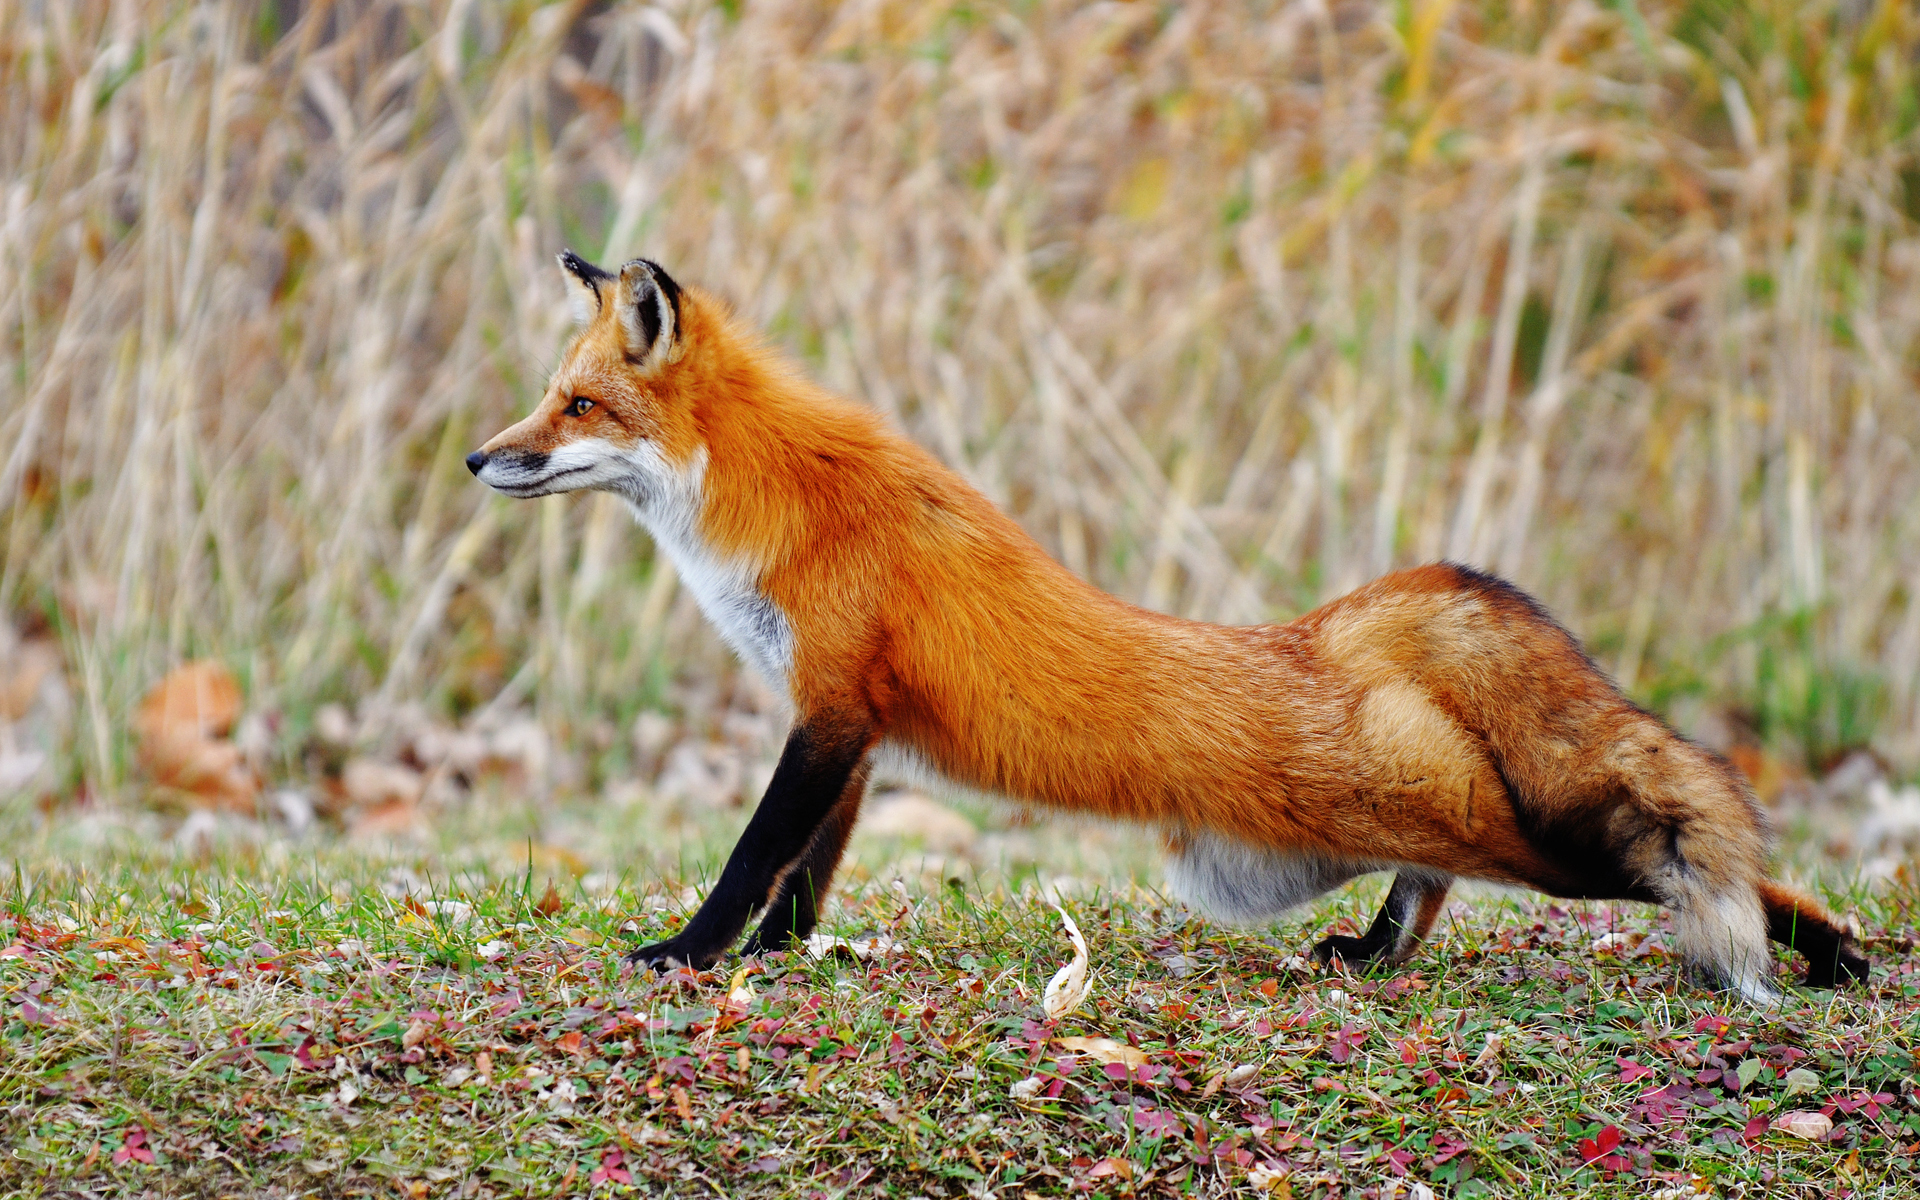 Animal Fox HD Wallpaper | Background Image